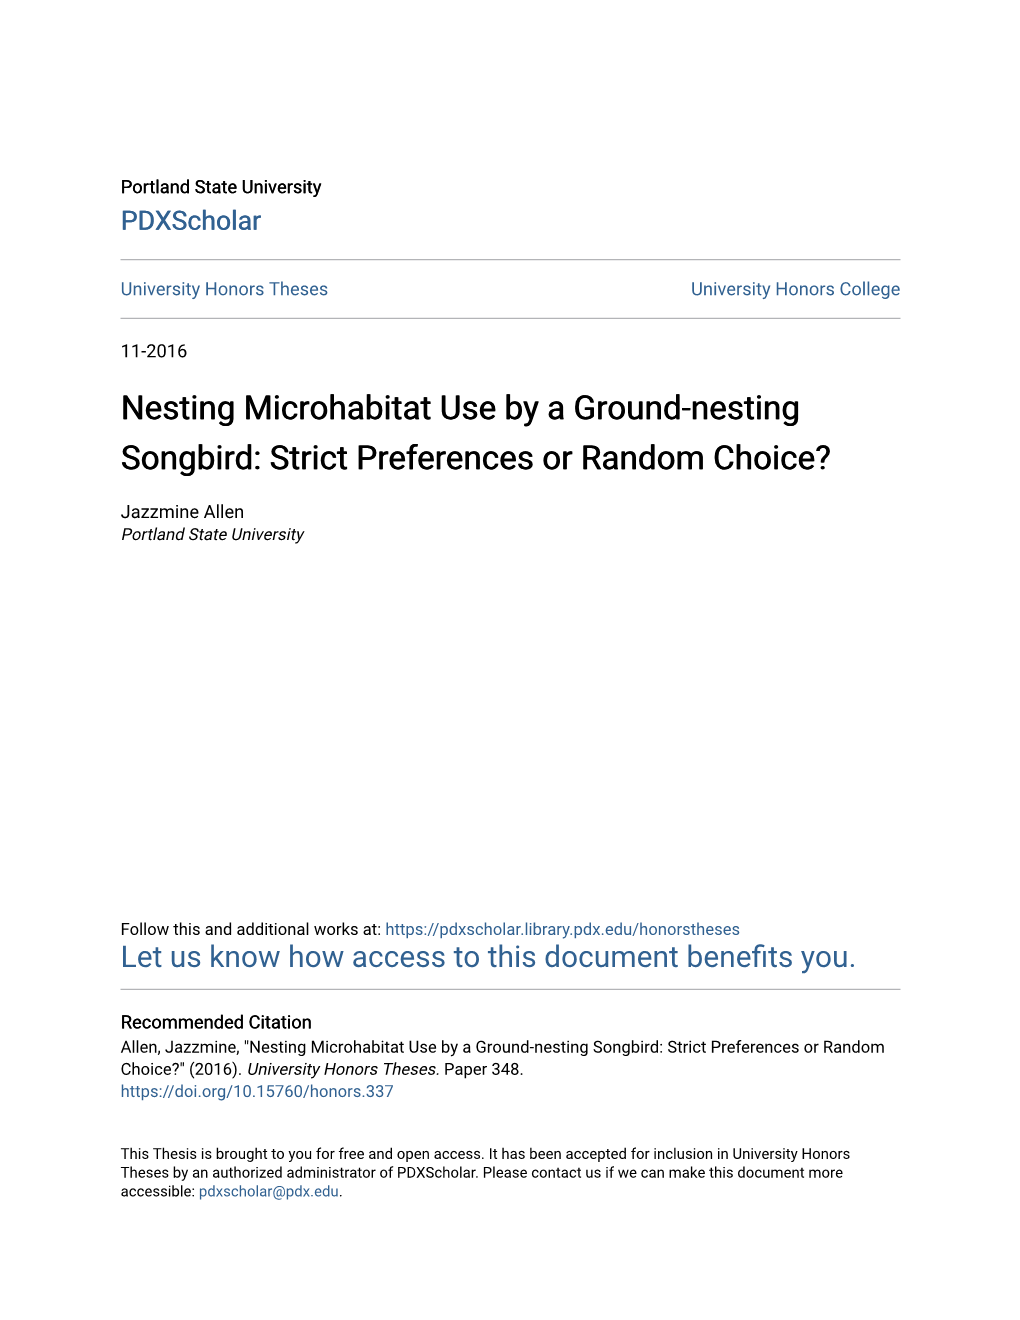 Nesting Microhabitat Use by a Ground-Nesting Songbird: Strict Preferences Or Random Choice?